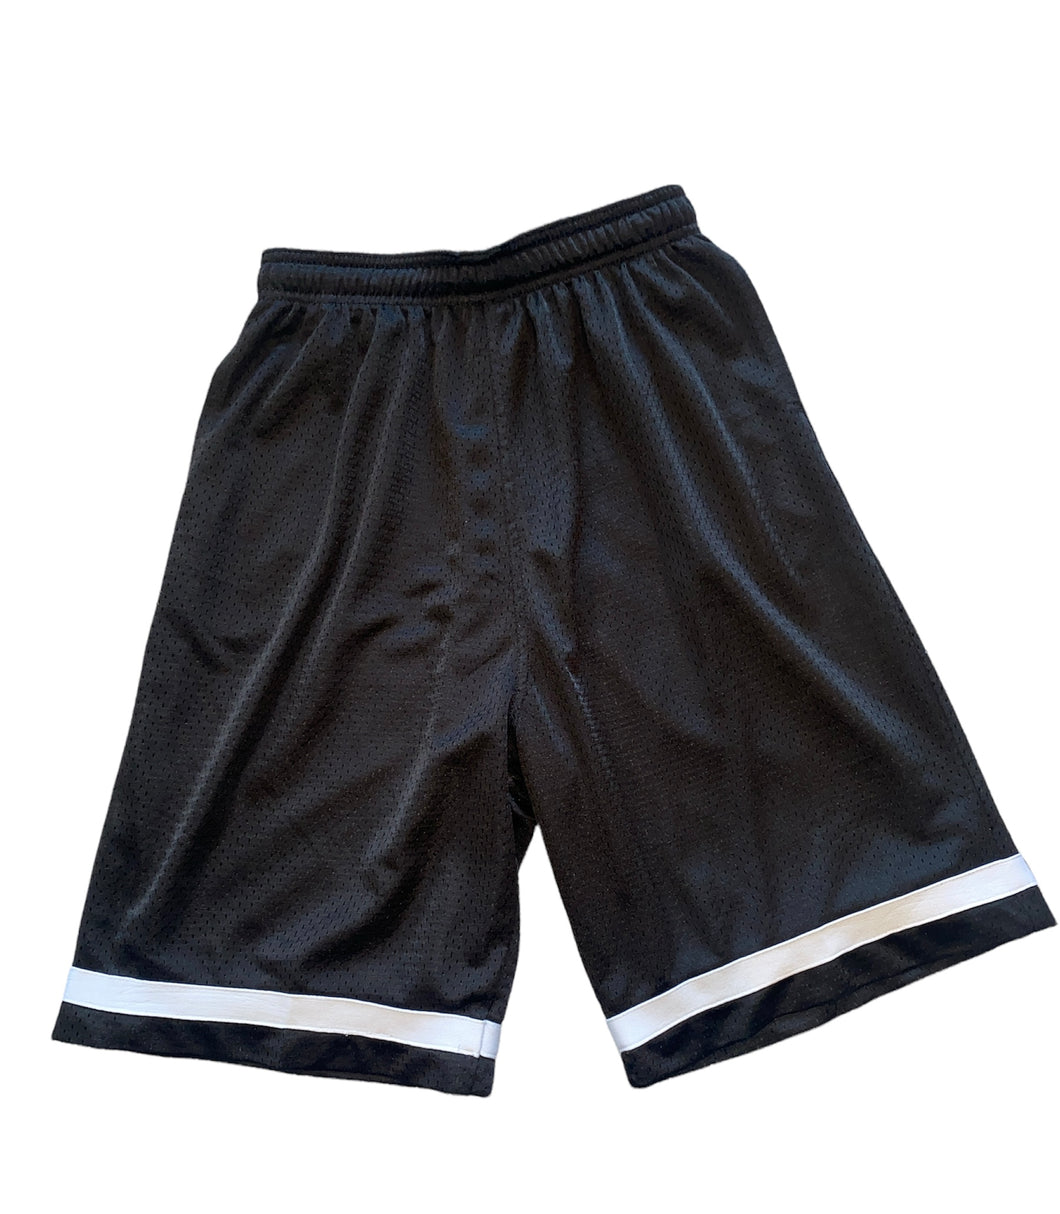 Denny’s big boys long mesh shorts in black L(14-16)